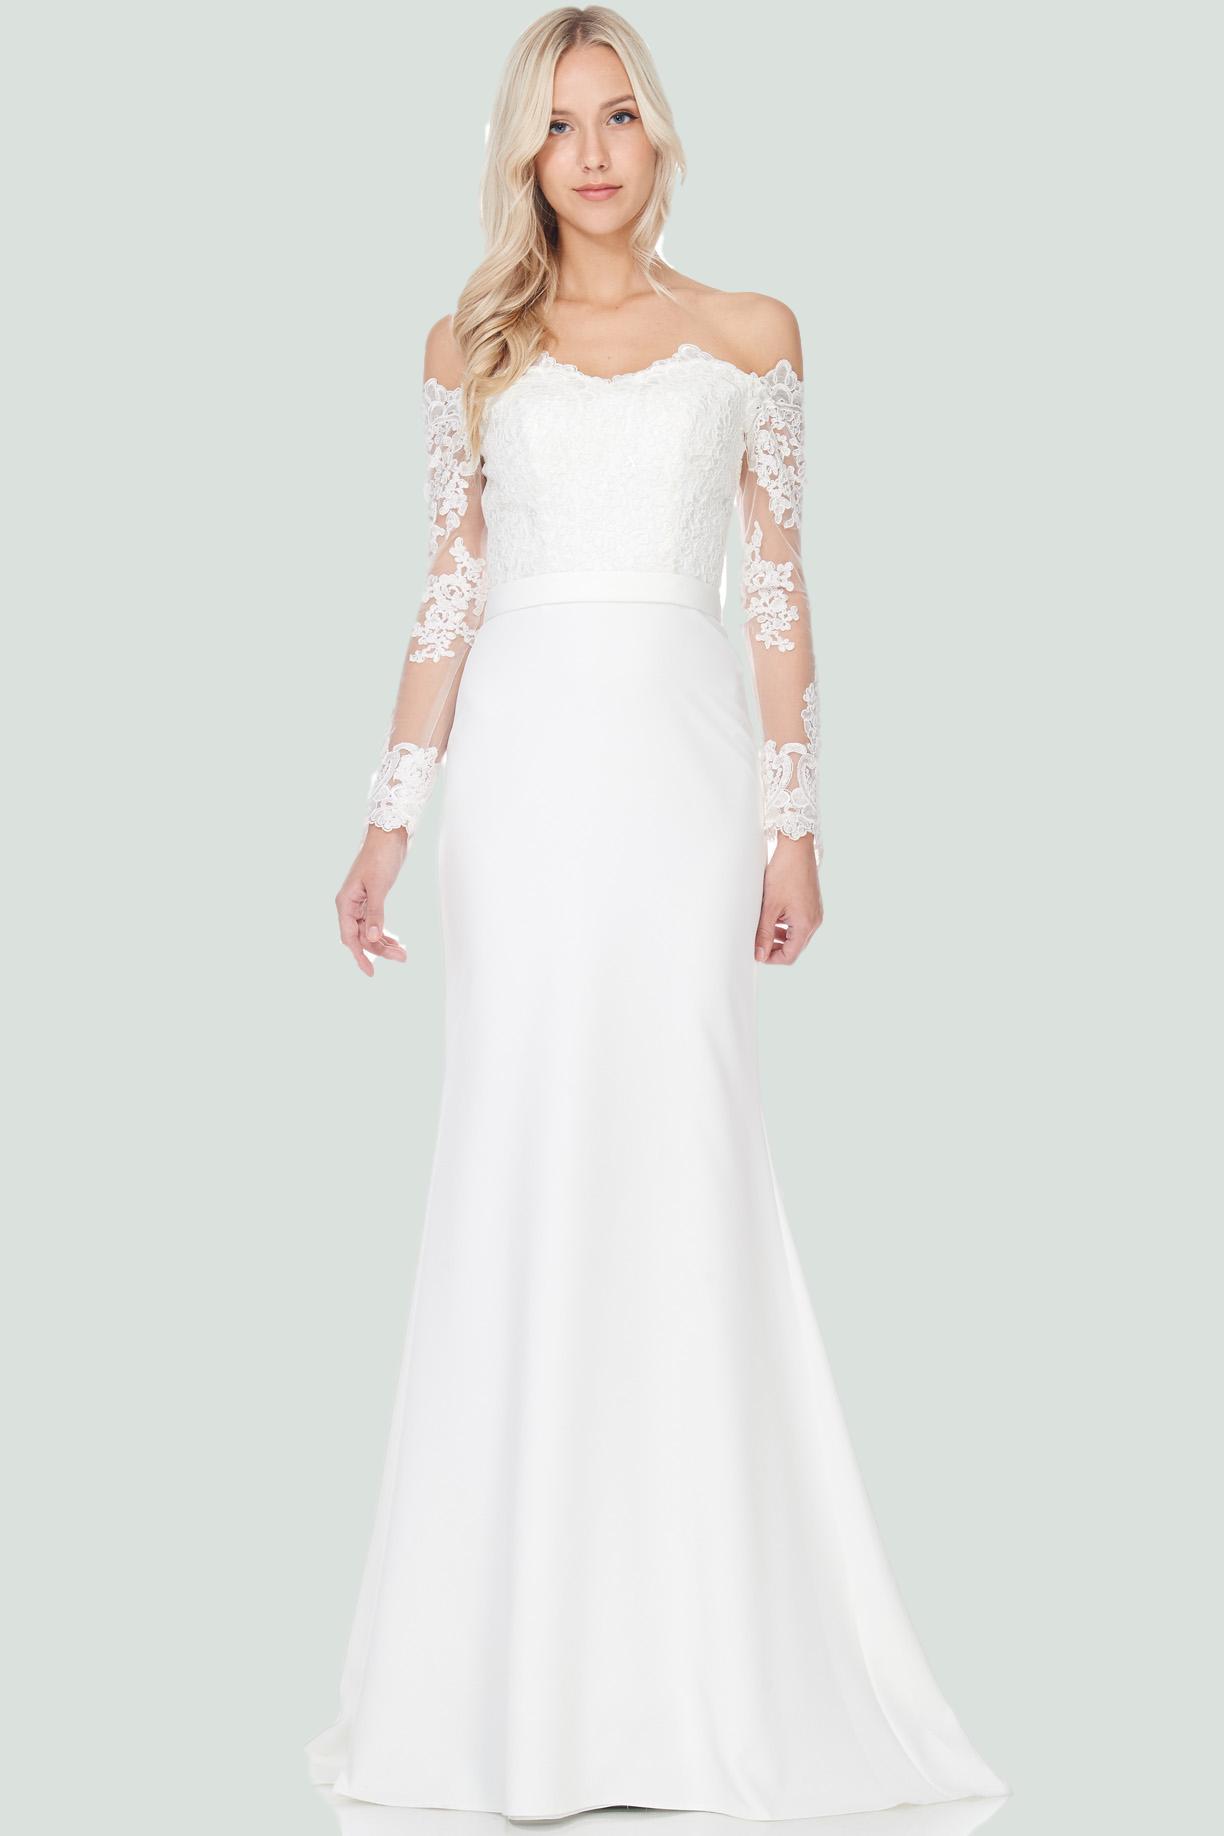 Elegant simple long sleeve lace wedding dress - Simply Fab ...